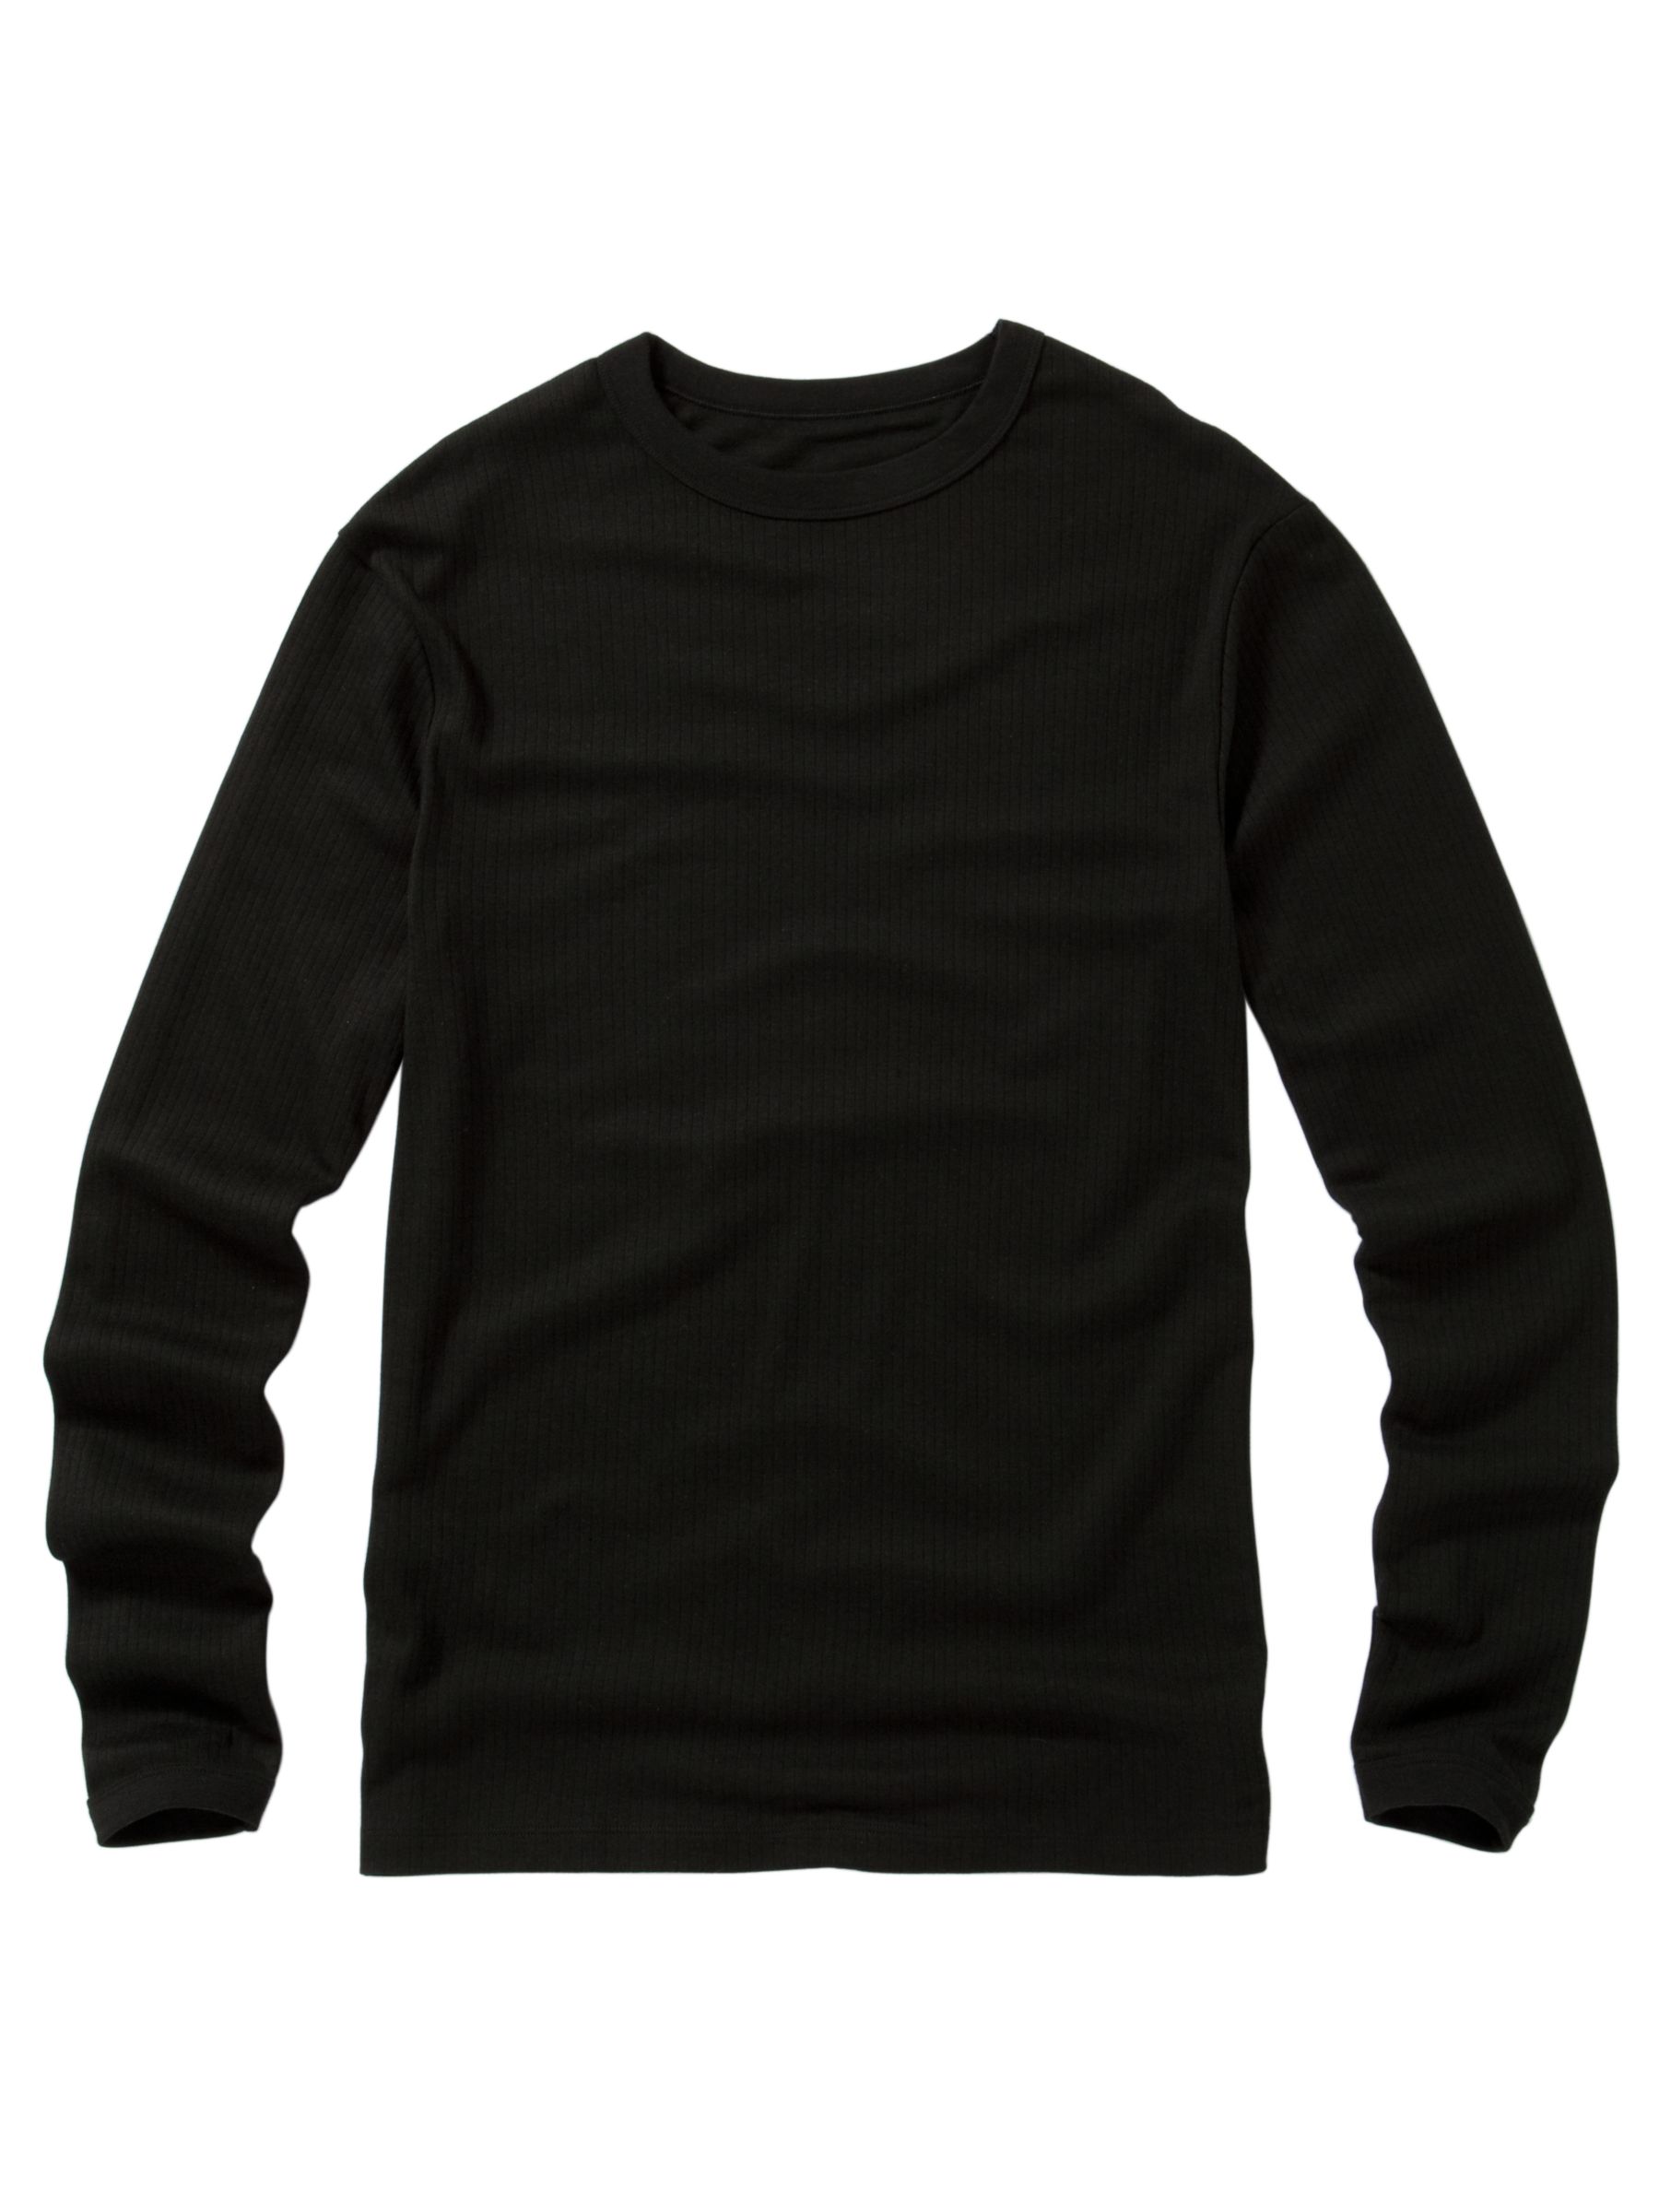 Thermal Long Sleeve T-Shirt, Black